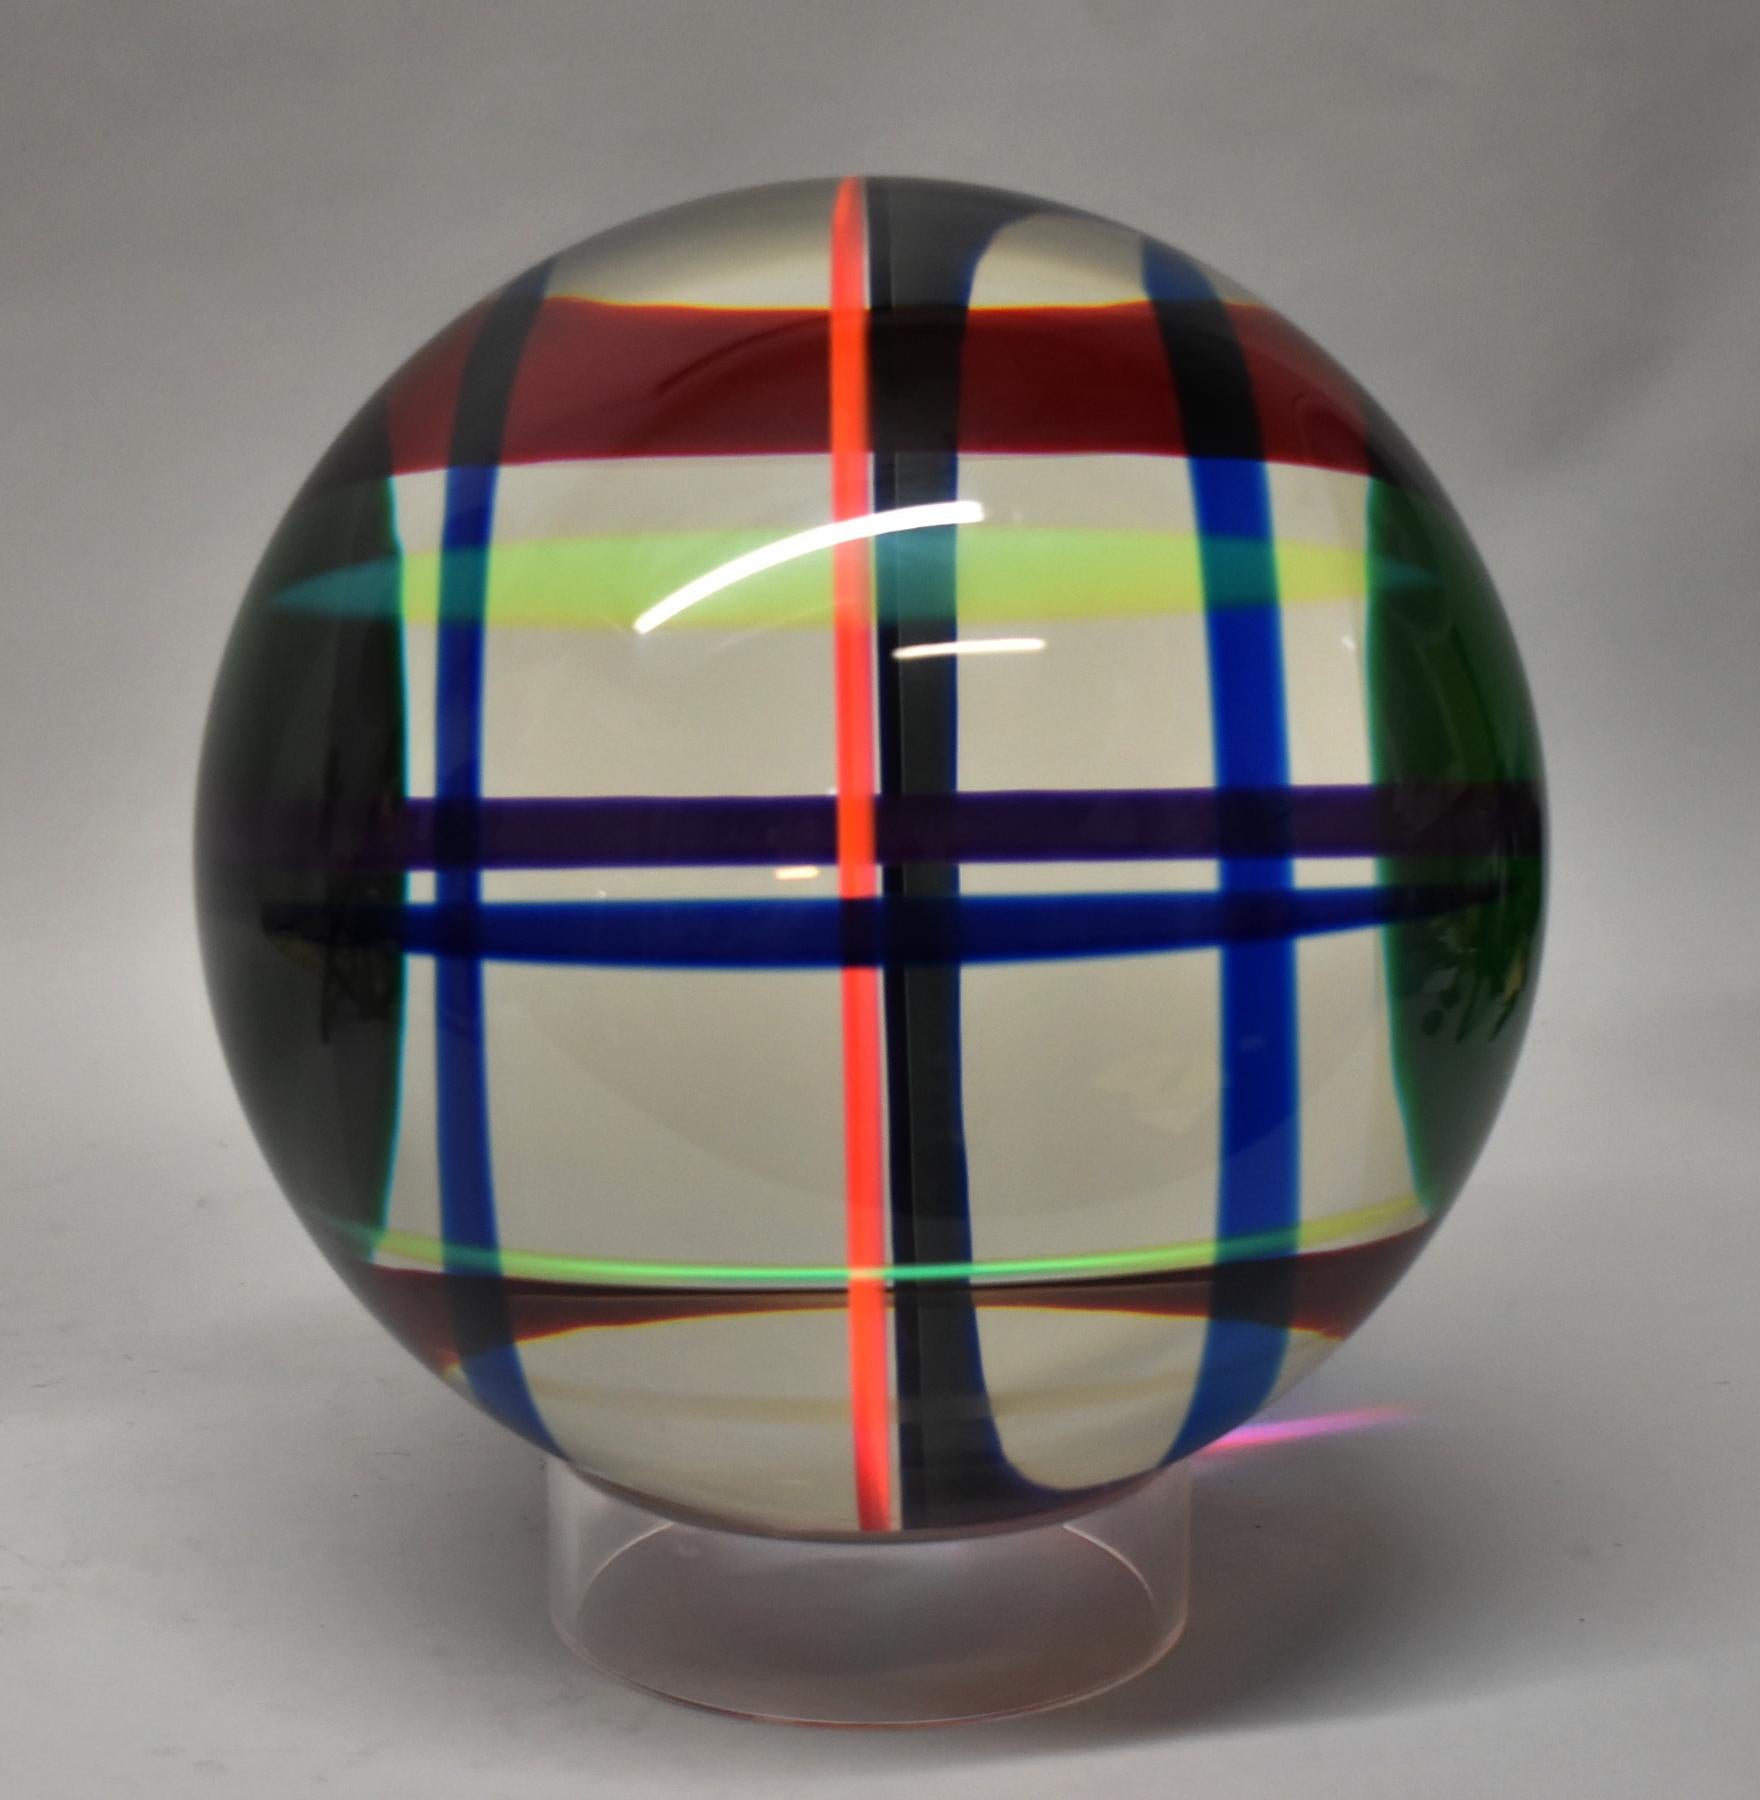 North American Velizar Vasa Mihich Multi Colored Sculpture Acrylic Sphere Signed 1993